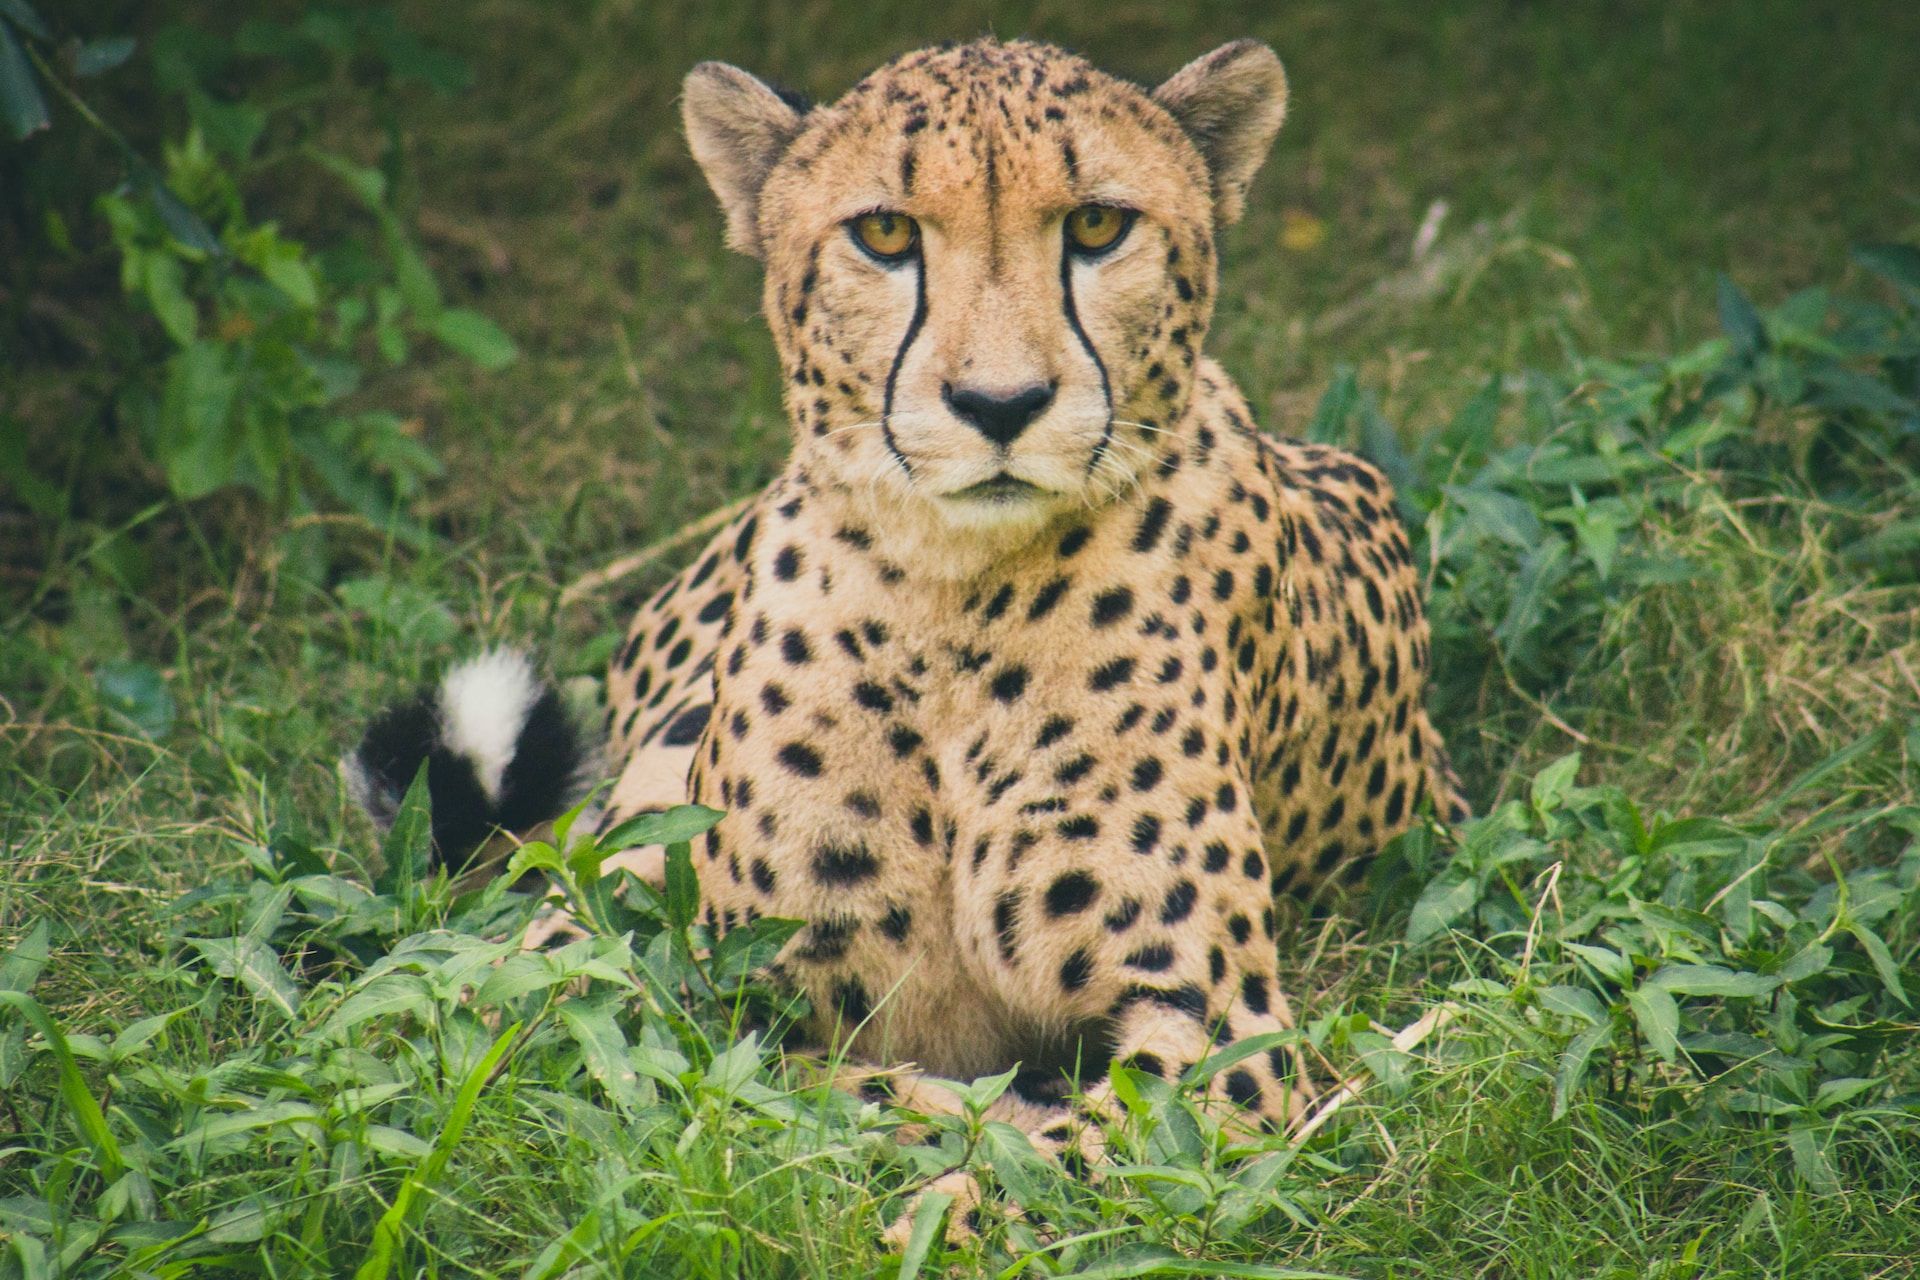 Cheetah at a wildlife sanctuary